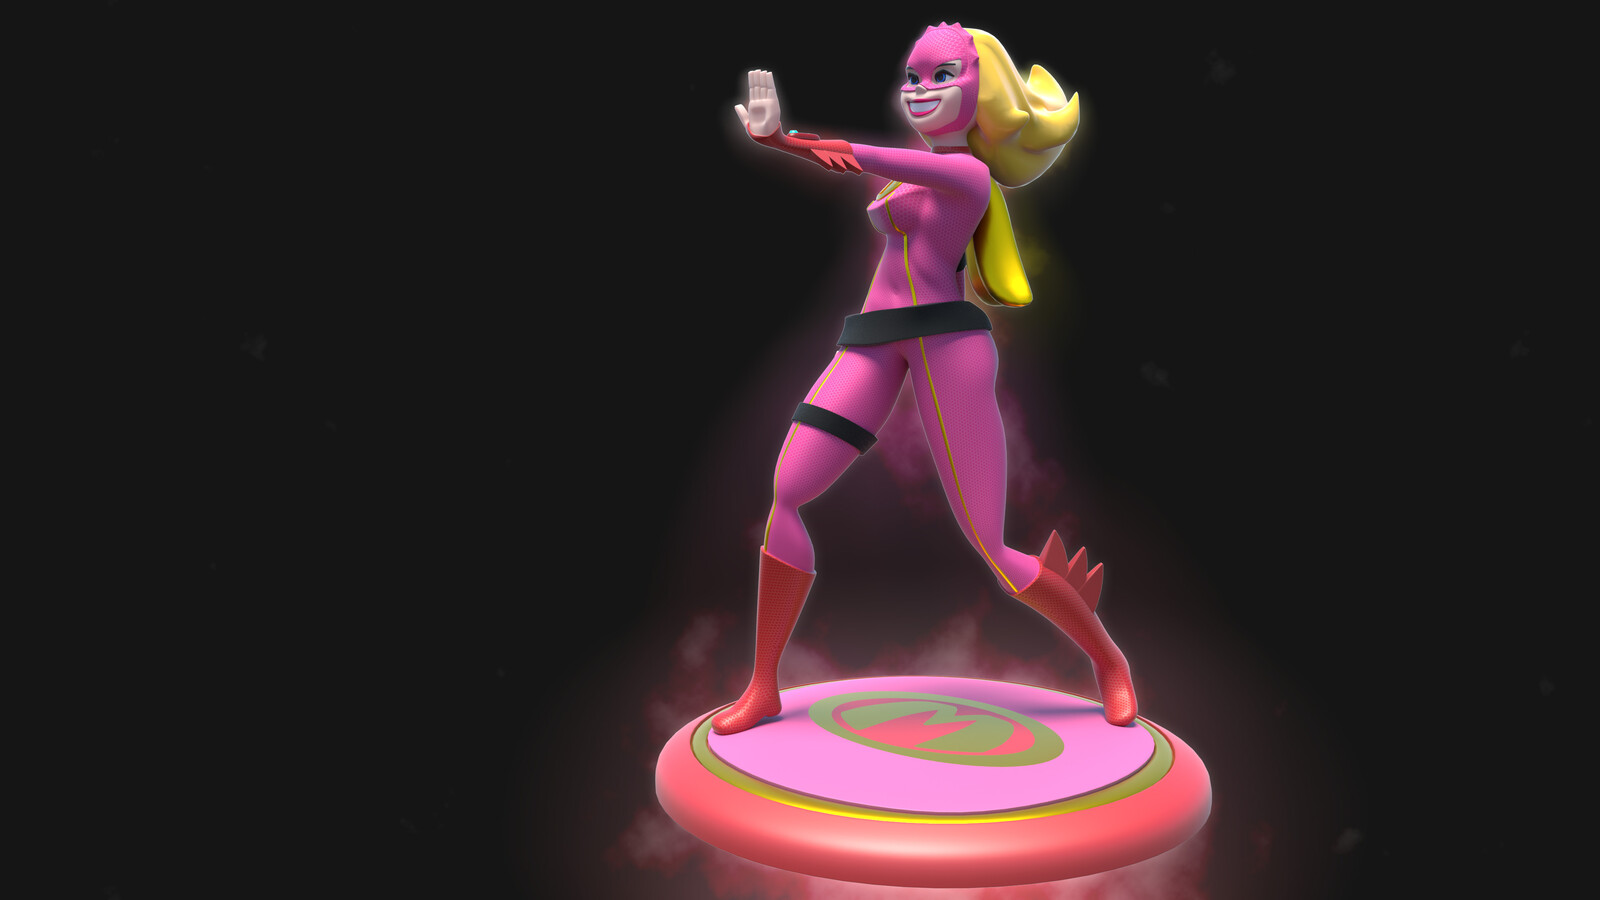 Mega Mindy fan Art
Mega Mindy re-imagined as a Disney Infinity heroine